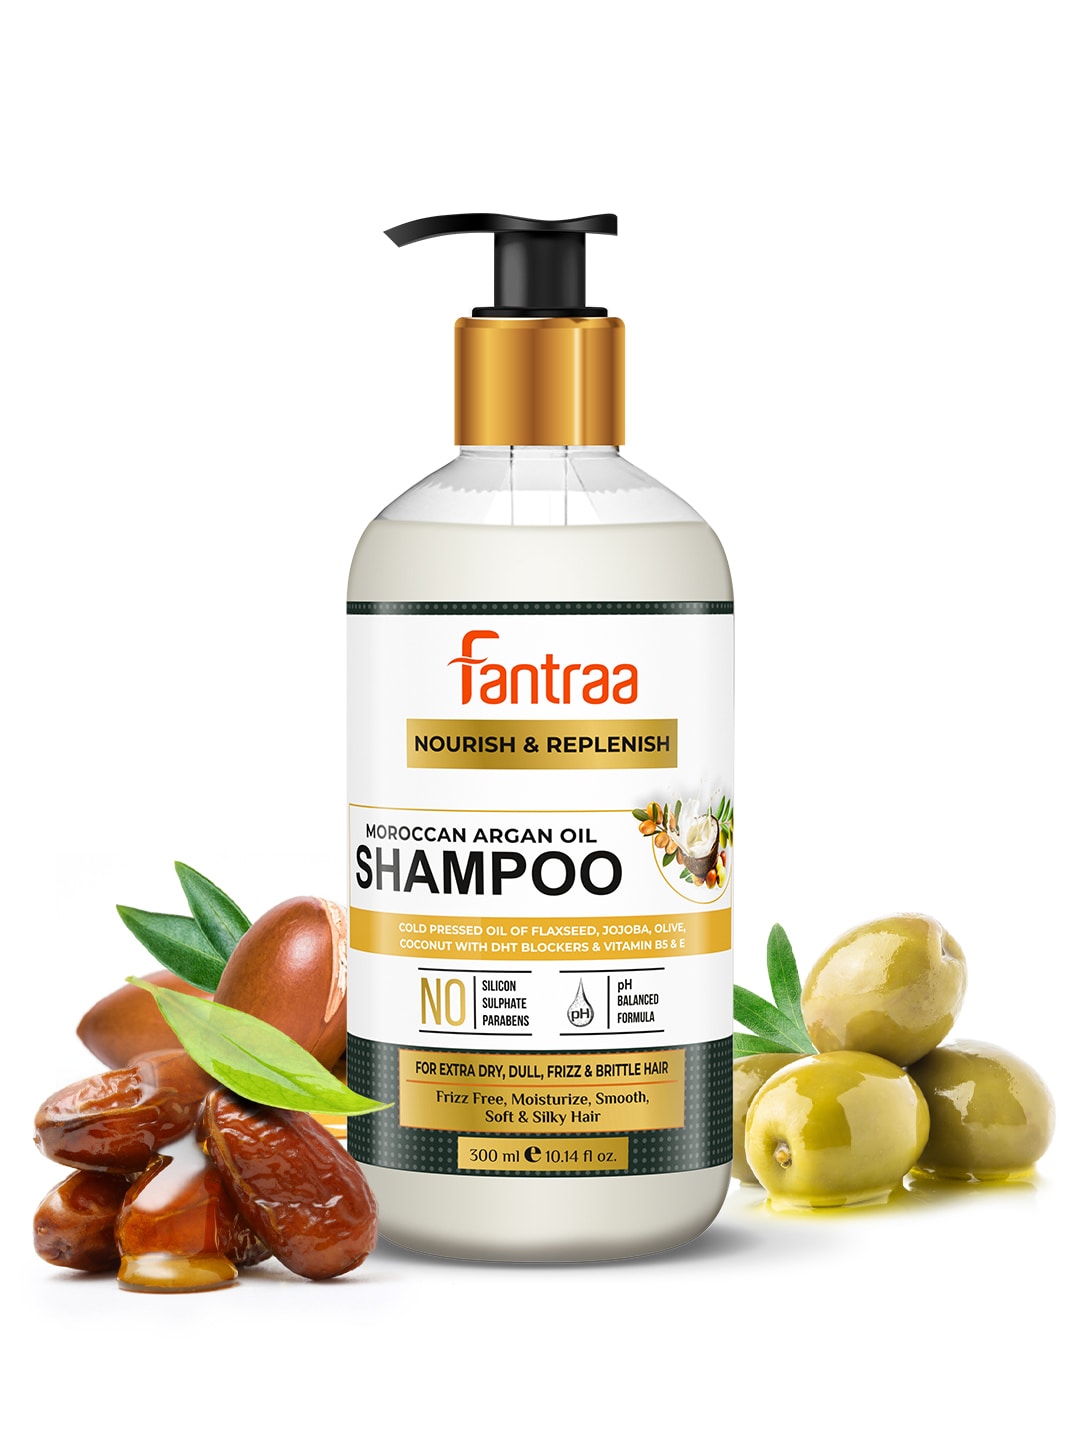 Fantraa Moroccan Argan Oil Shampoo - 300 ml Price in India